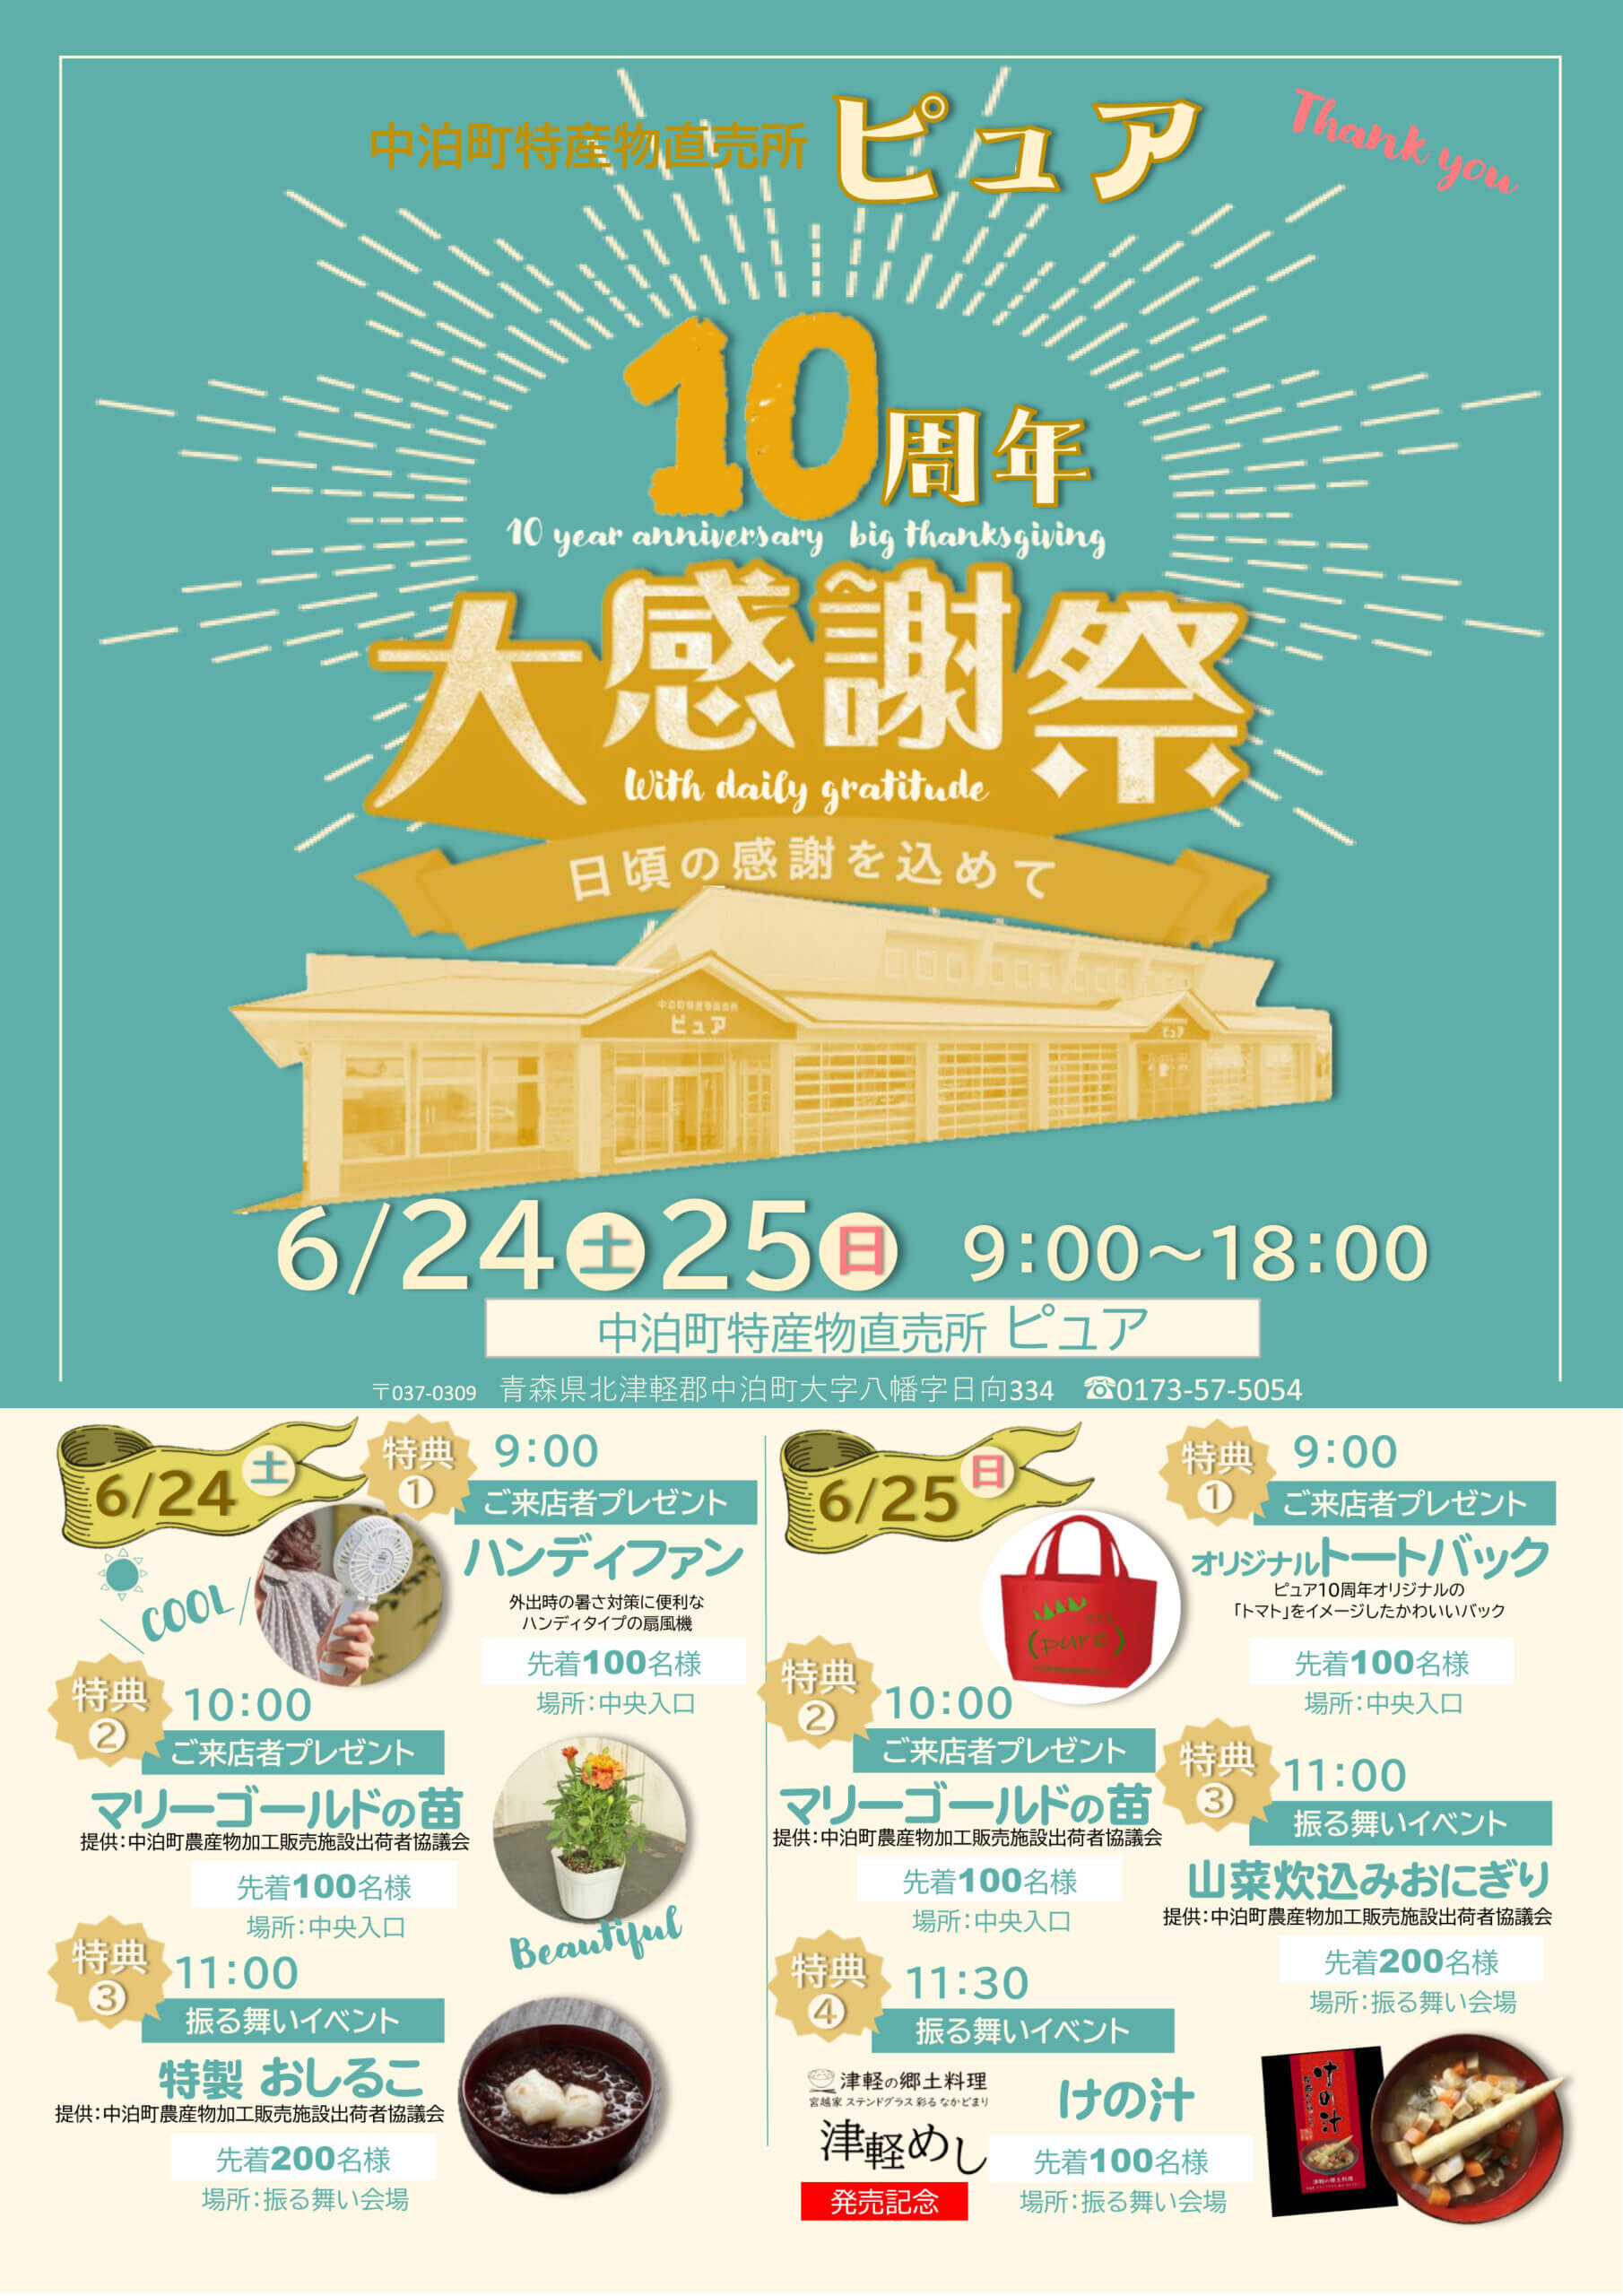 Featured image for “中泊町特産物直売所「ピュア」１０周年について”